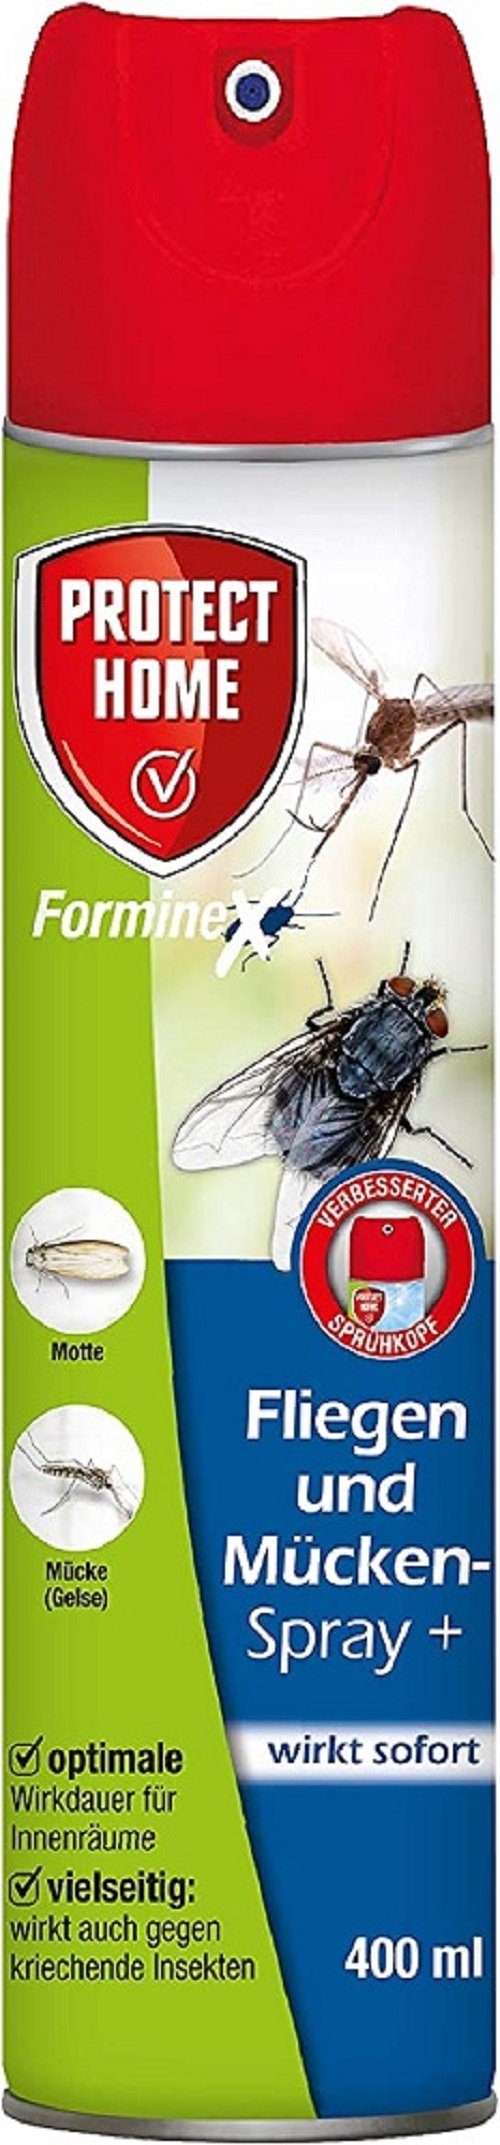 Protect Home Insektenspray Protect Home Forminex Fliegen- u. Mücken Spray+ 400ml, 400 ml